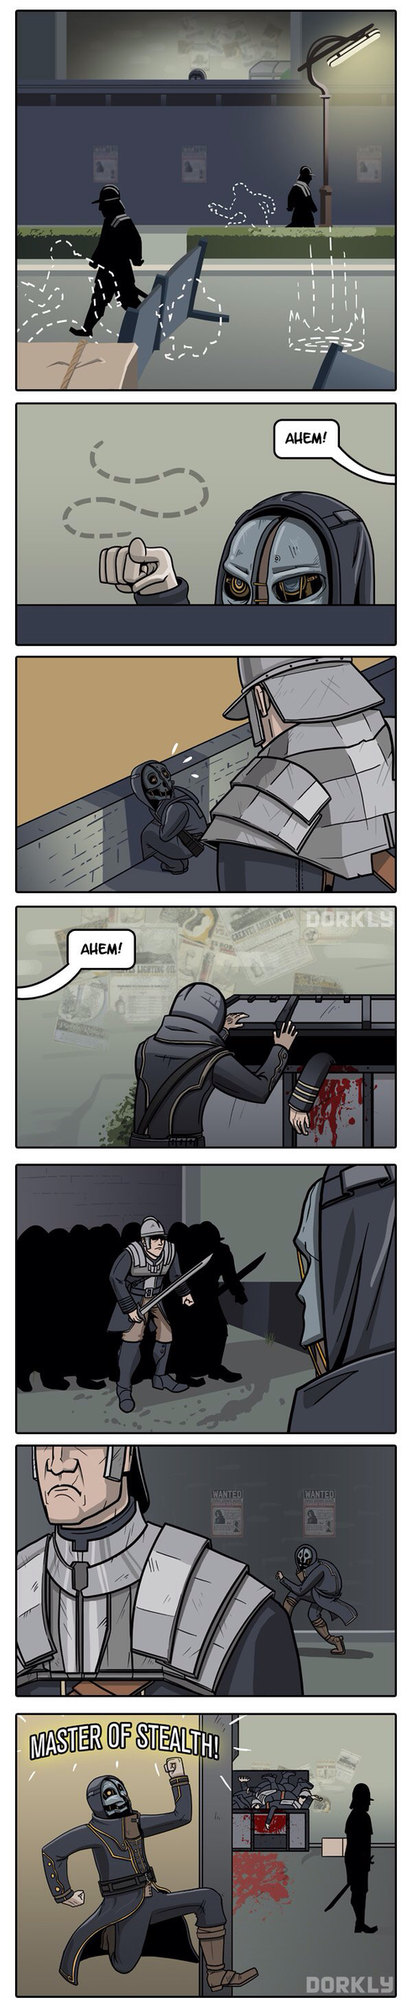 Corvo is the best assassin ever - meme